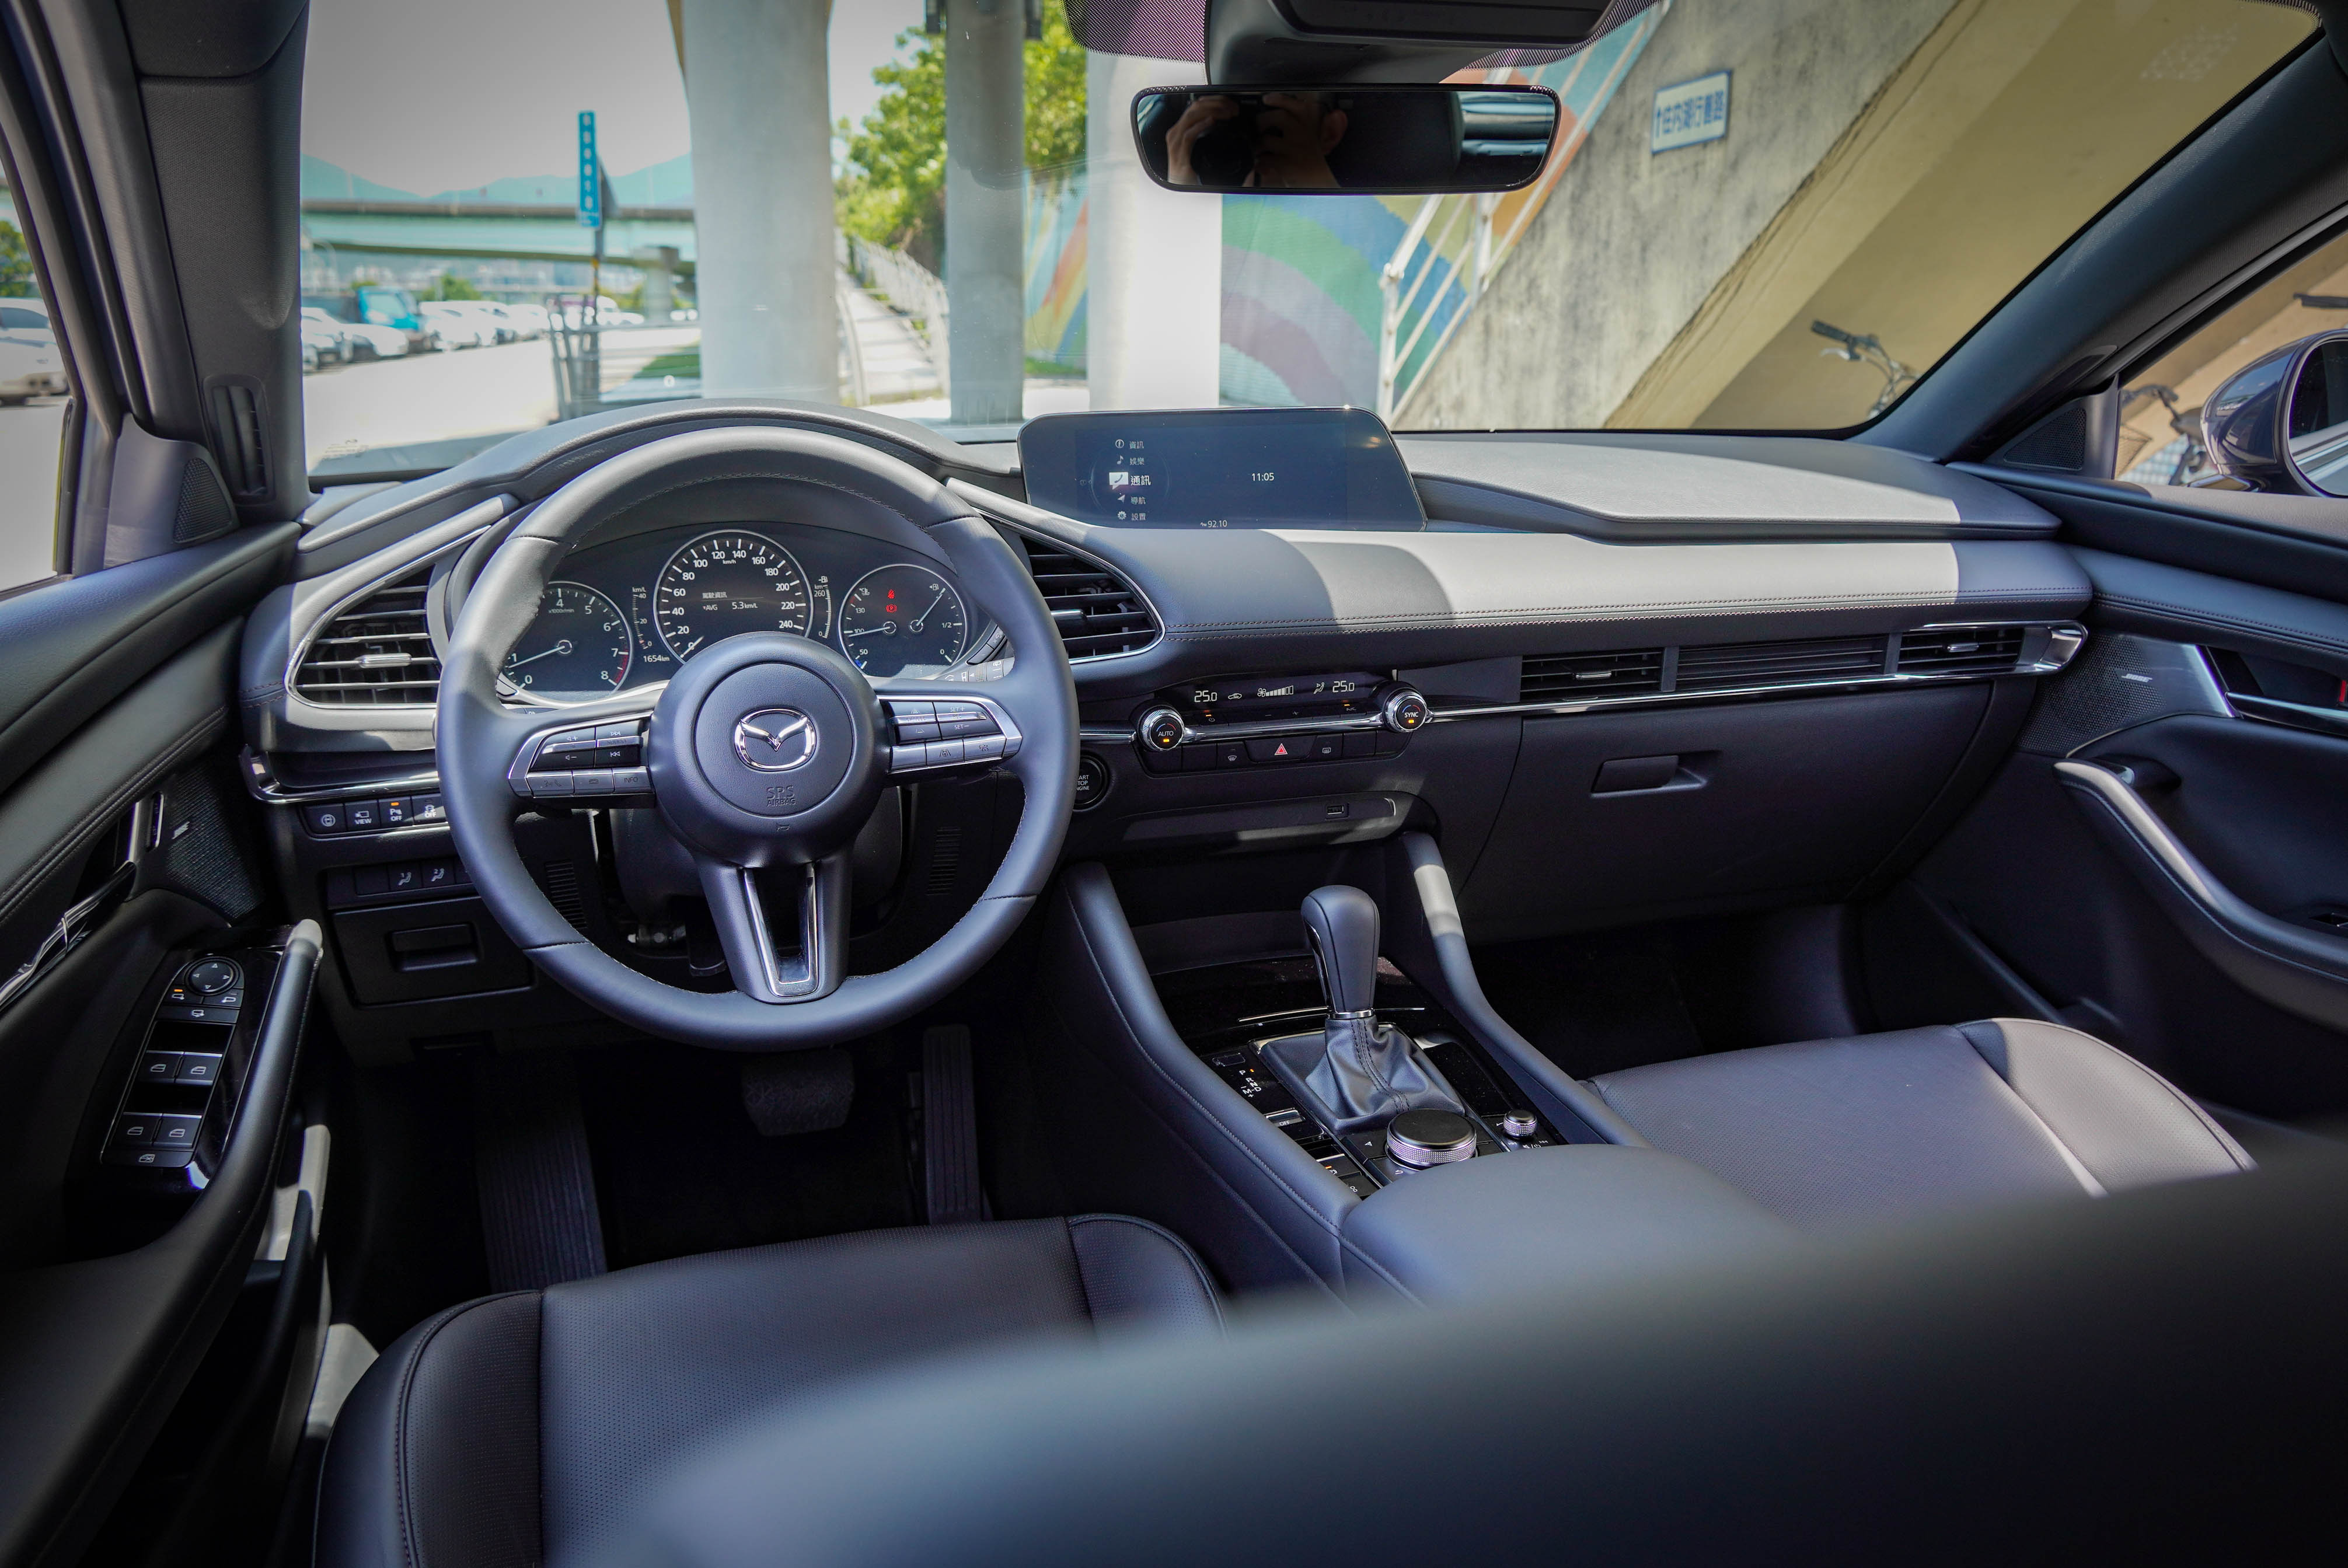 Mazda3 內裝標配 7 吋全彩數位儀錶、雙區獨立恆溫空調系統、Mazda Harmonic Acoustics 環場聲學音響系統、8.8 吋中央資訊顯示幕等科技。